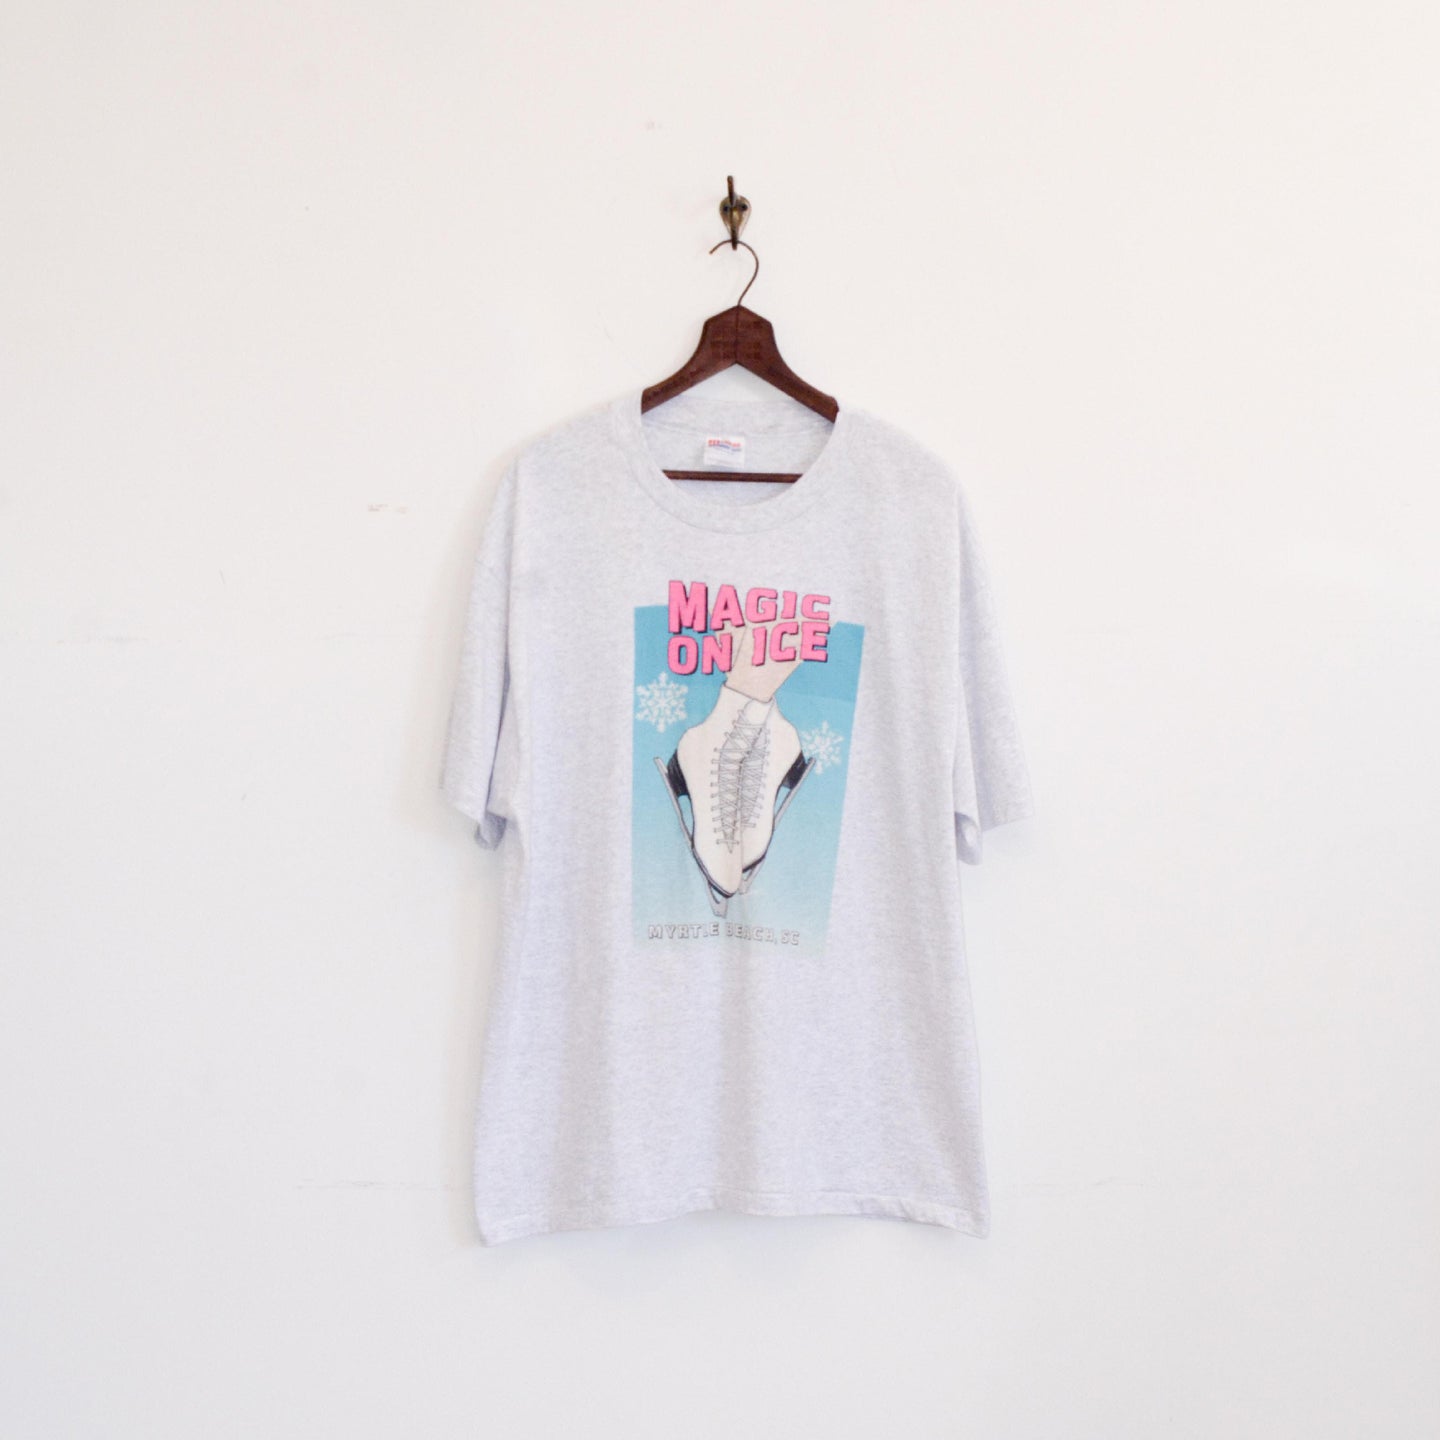 Hanes - Magic on Ice Souvenir Print Tee Shirt